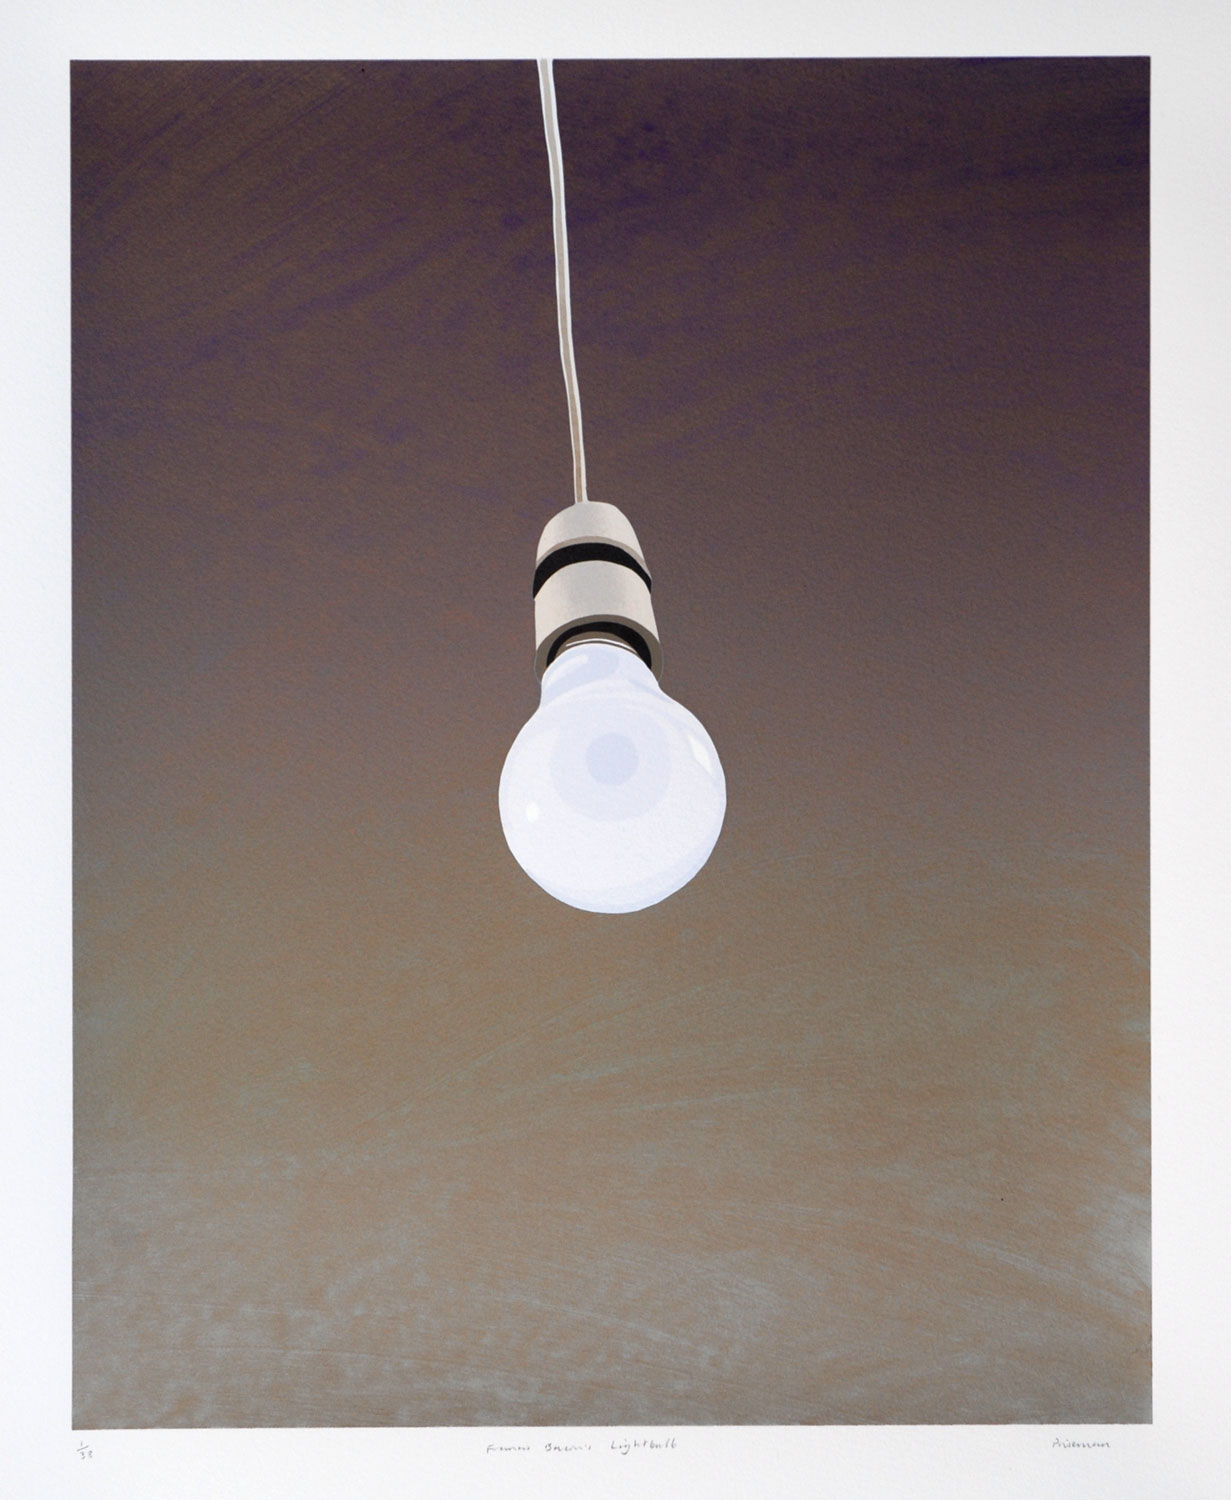 Francis Bacon's Lightbulb